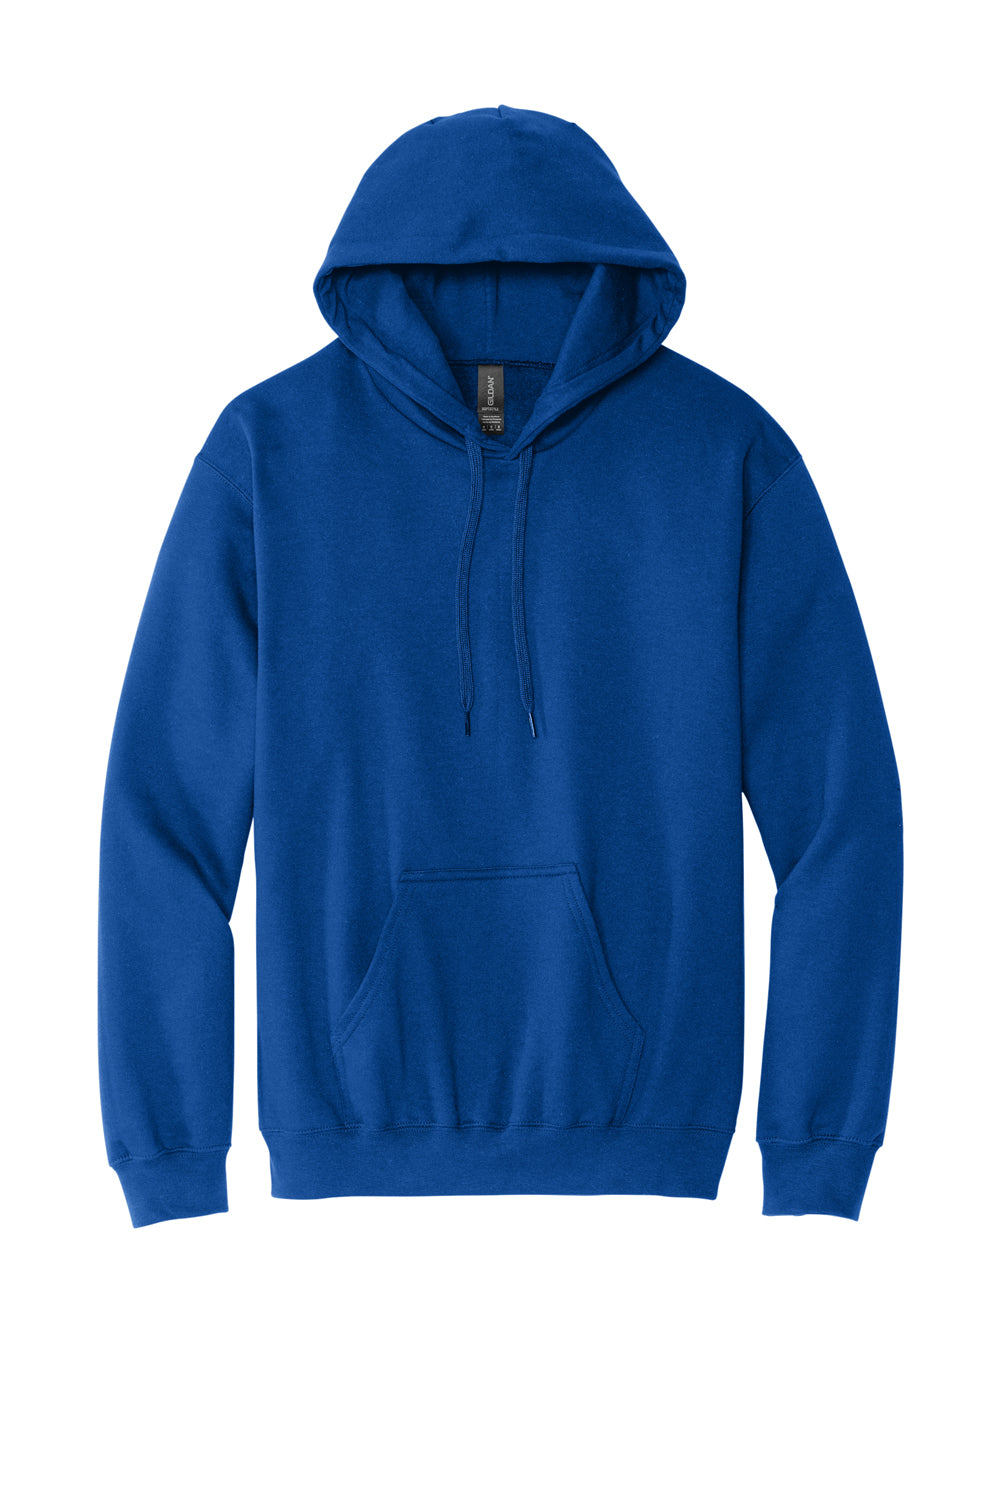 Gildan SF500 Softstyle Hooded Sweatshirt Hoodie Royal Blue Flat Front